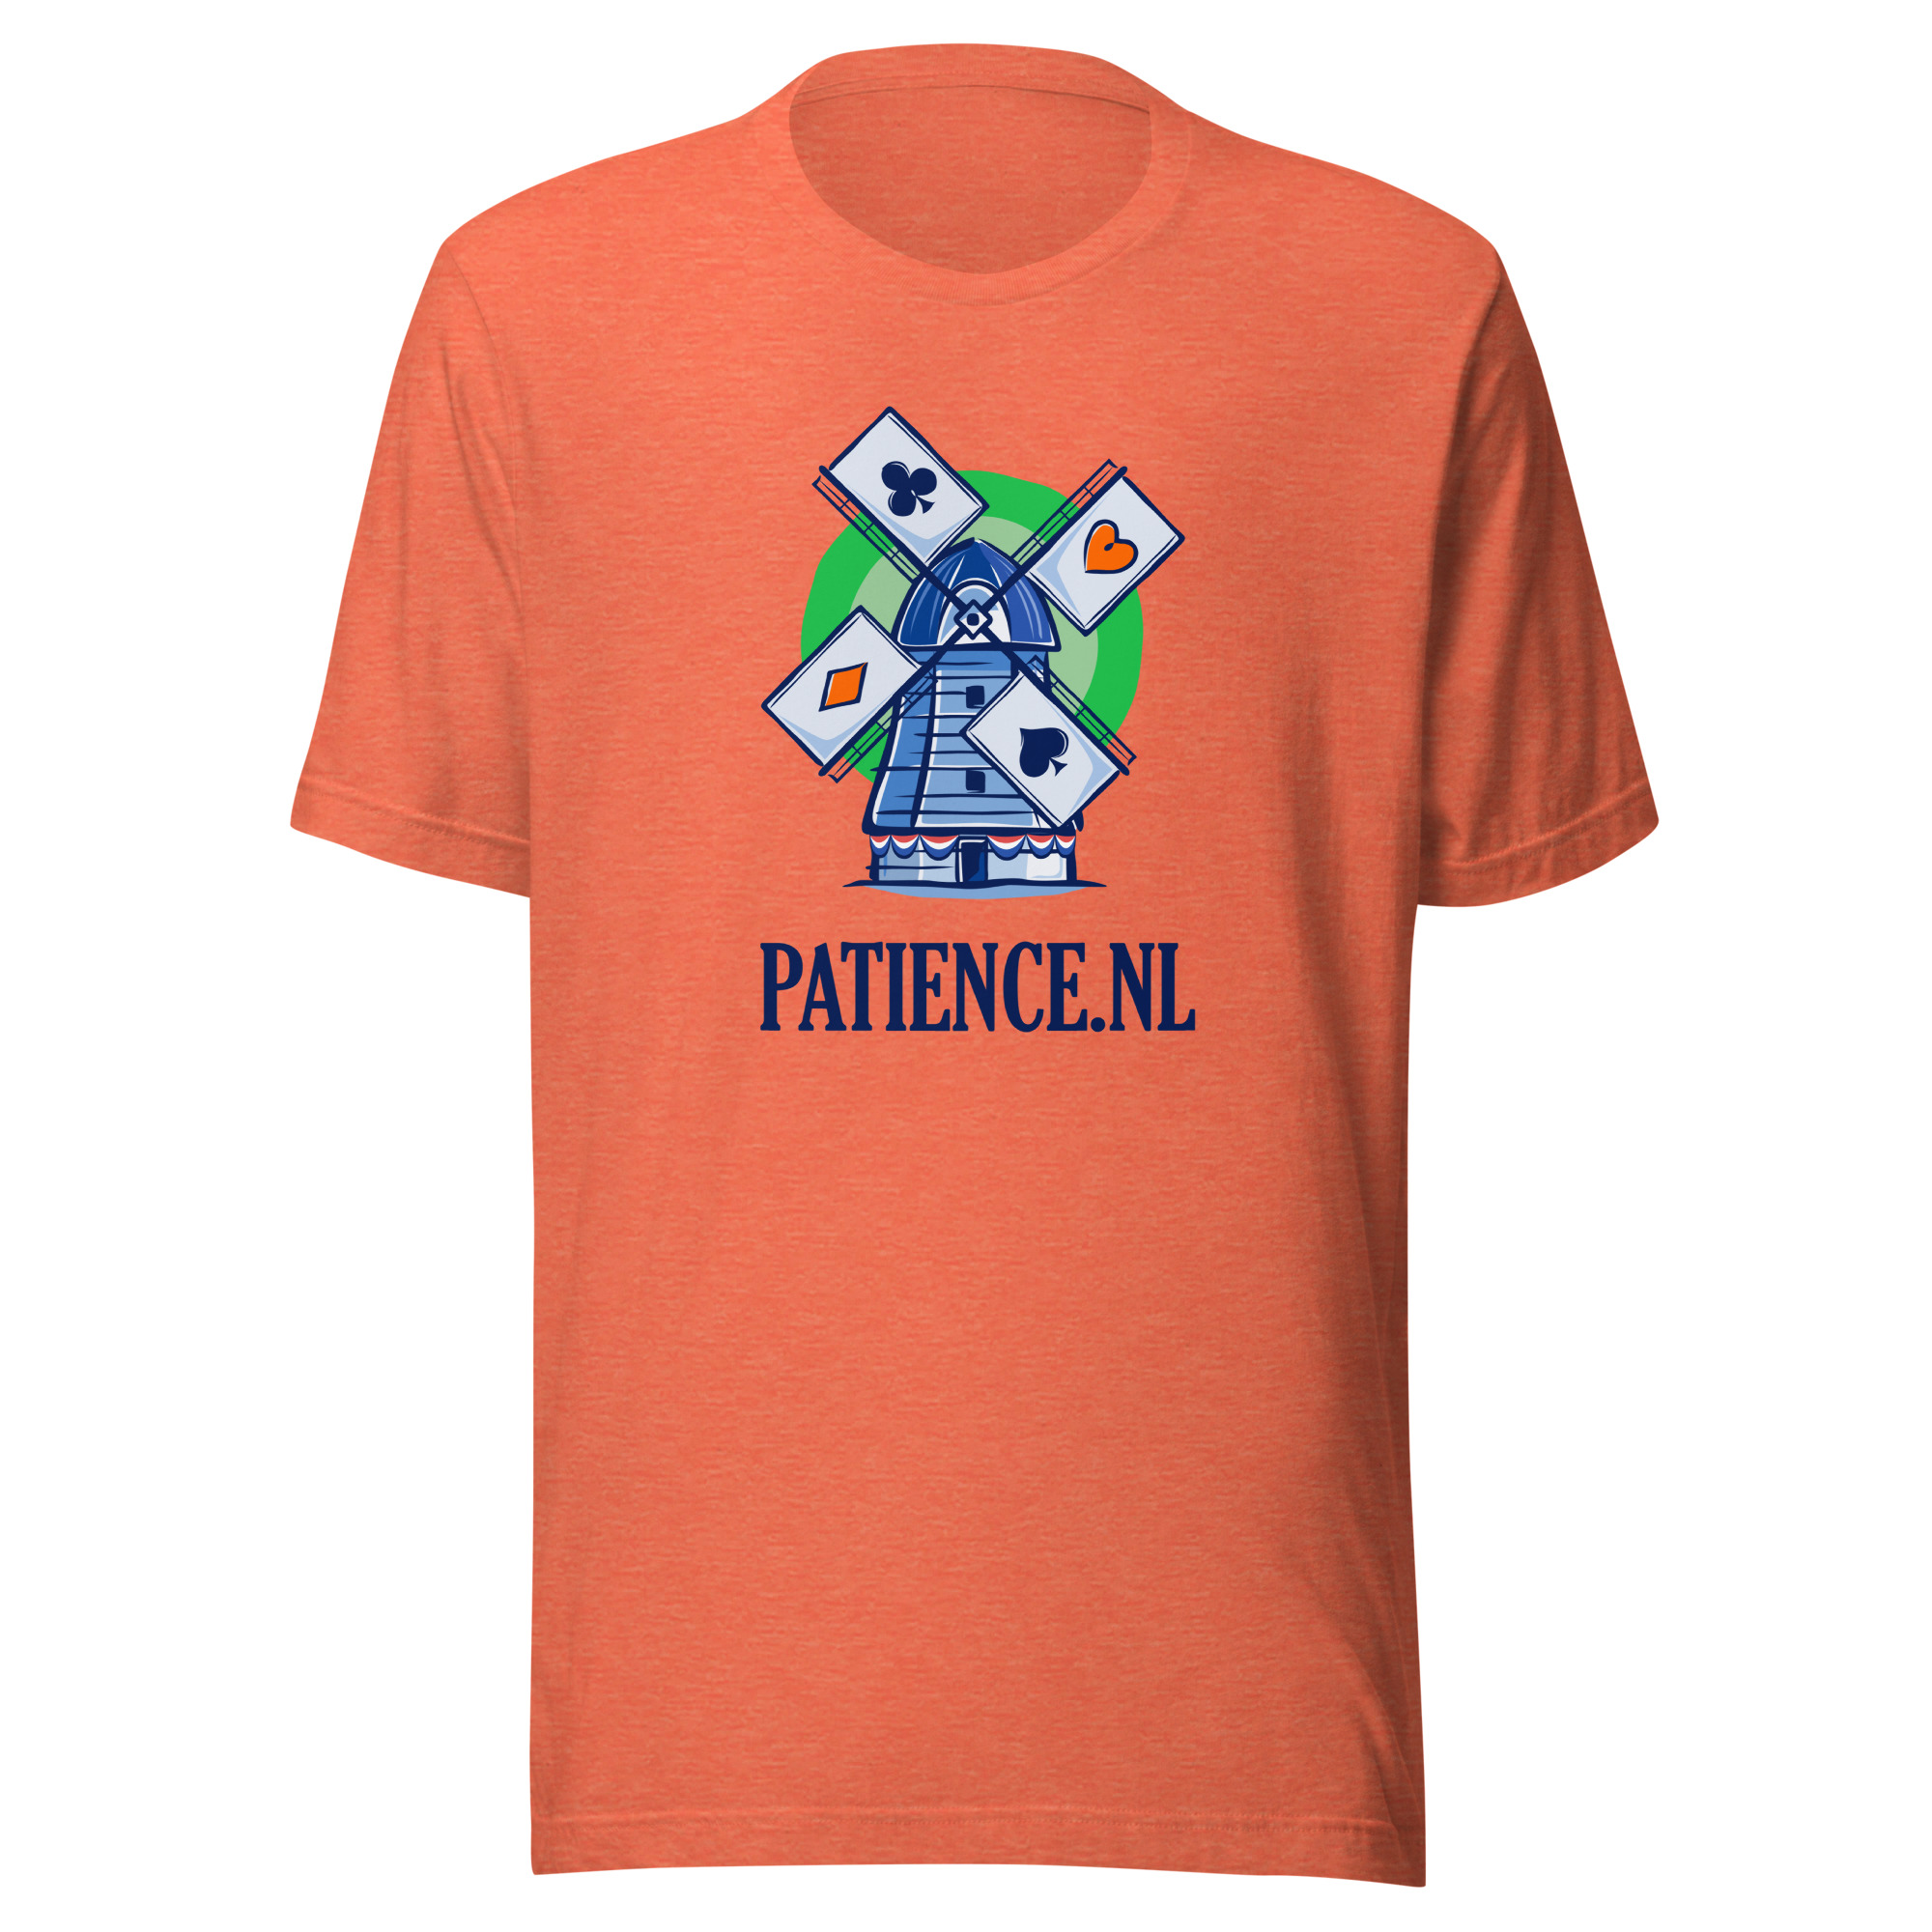 T-shirt Patience.nl Oranje